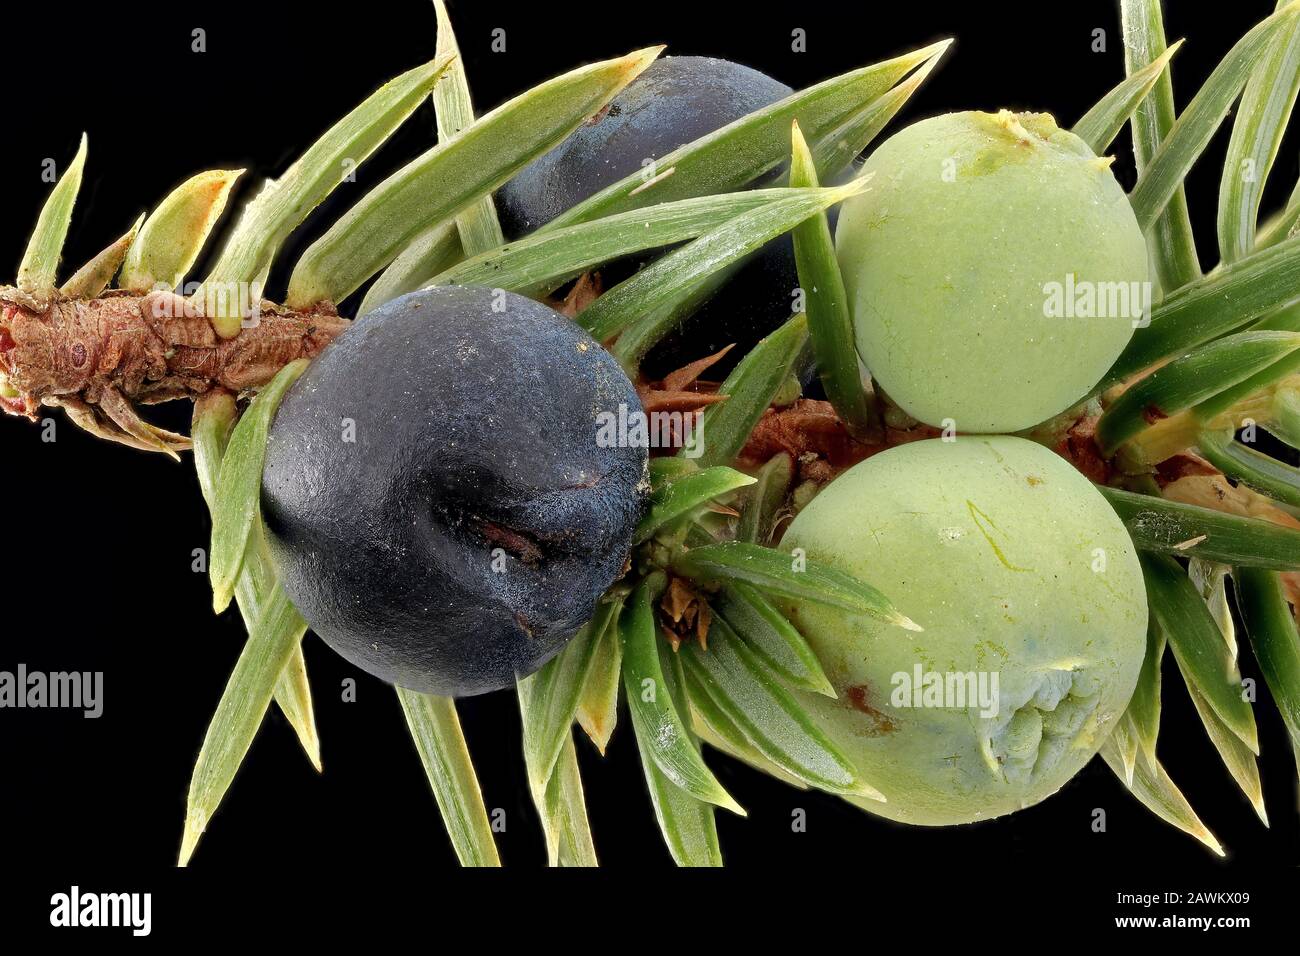 Juniperus communis, Common juniper, Gewöhnlicher Wacholder, fruits (cones), close up Stock Photo